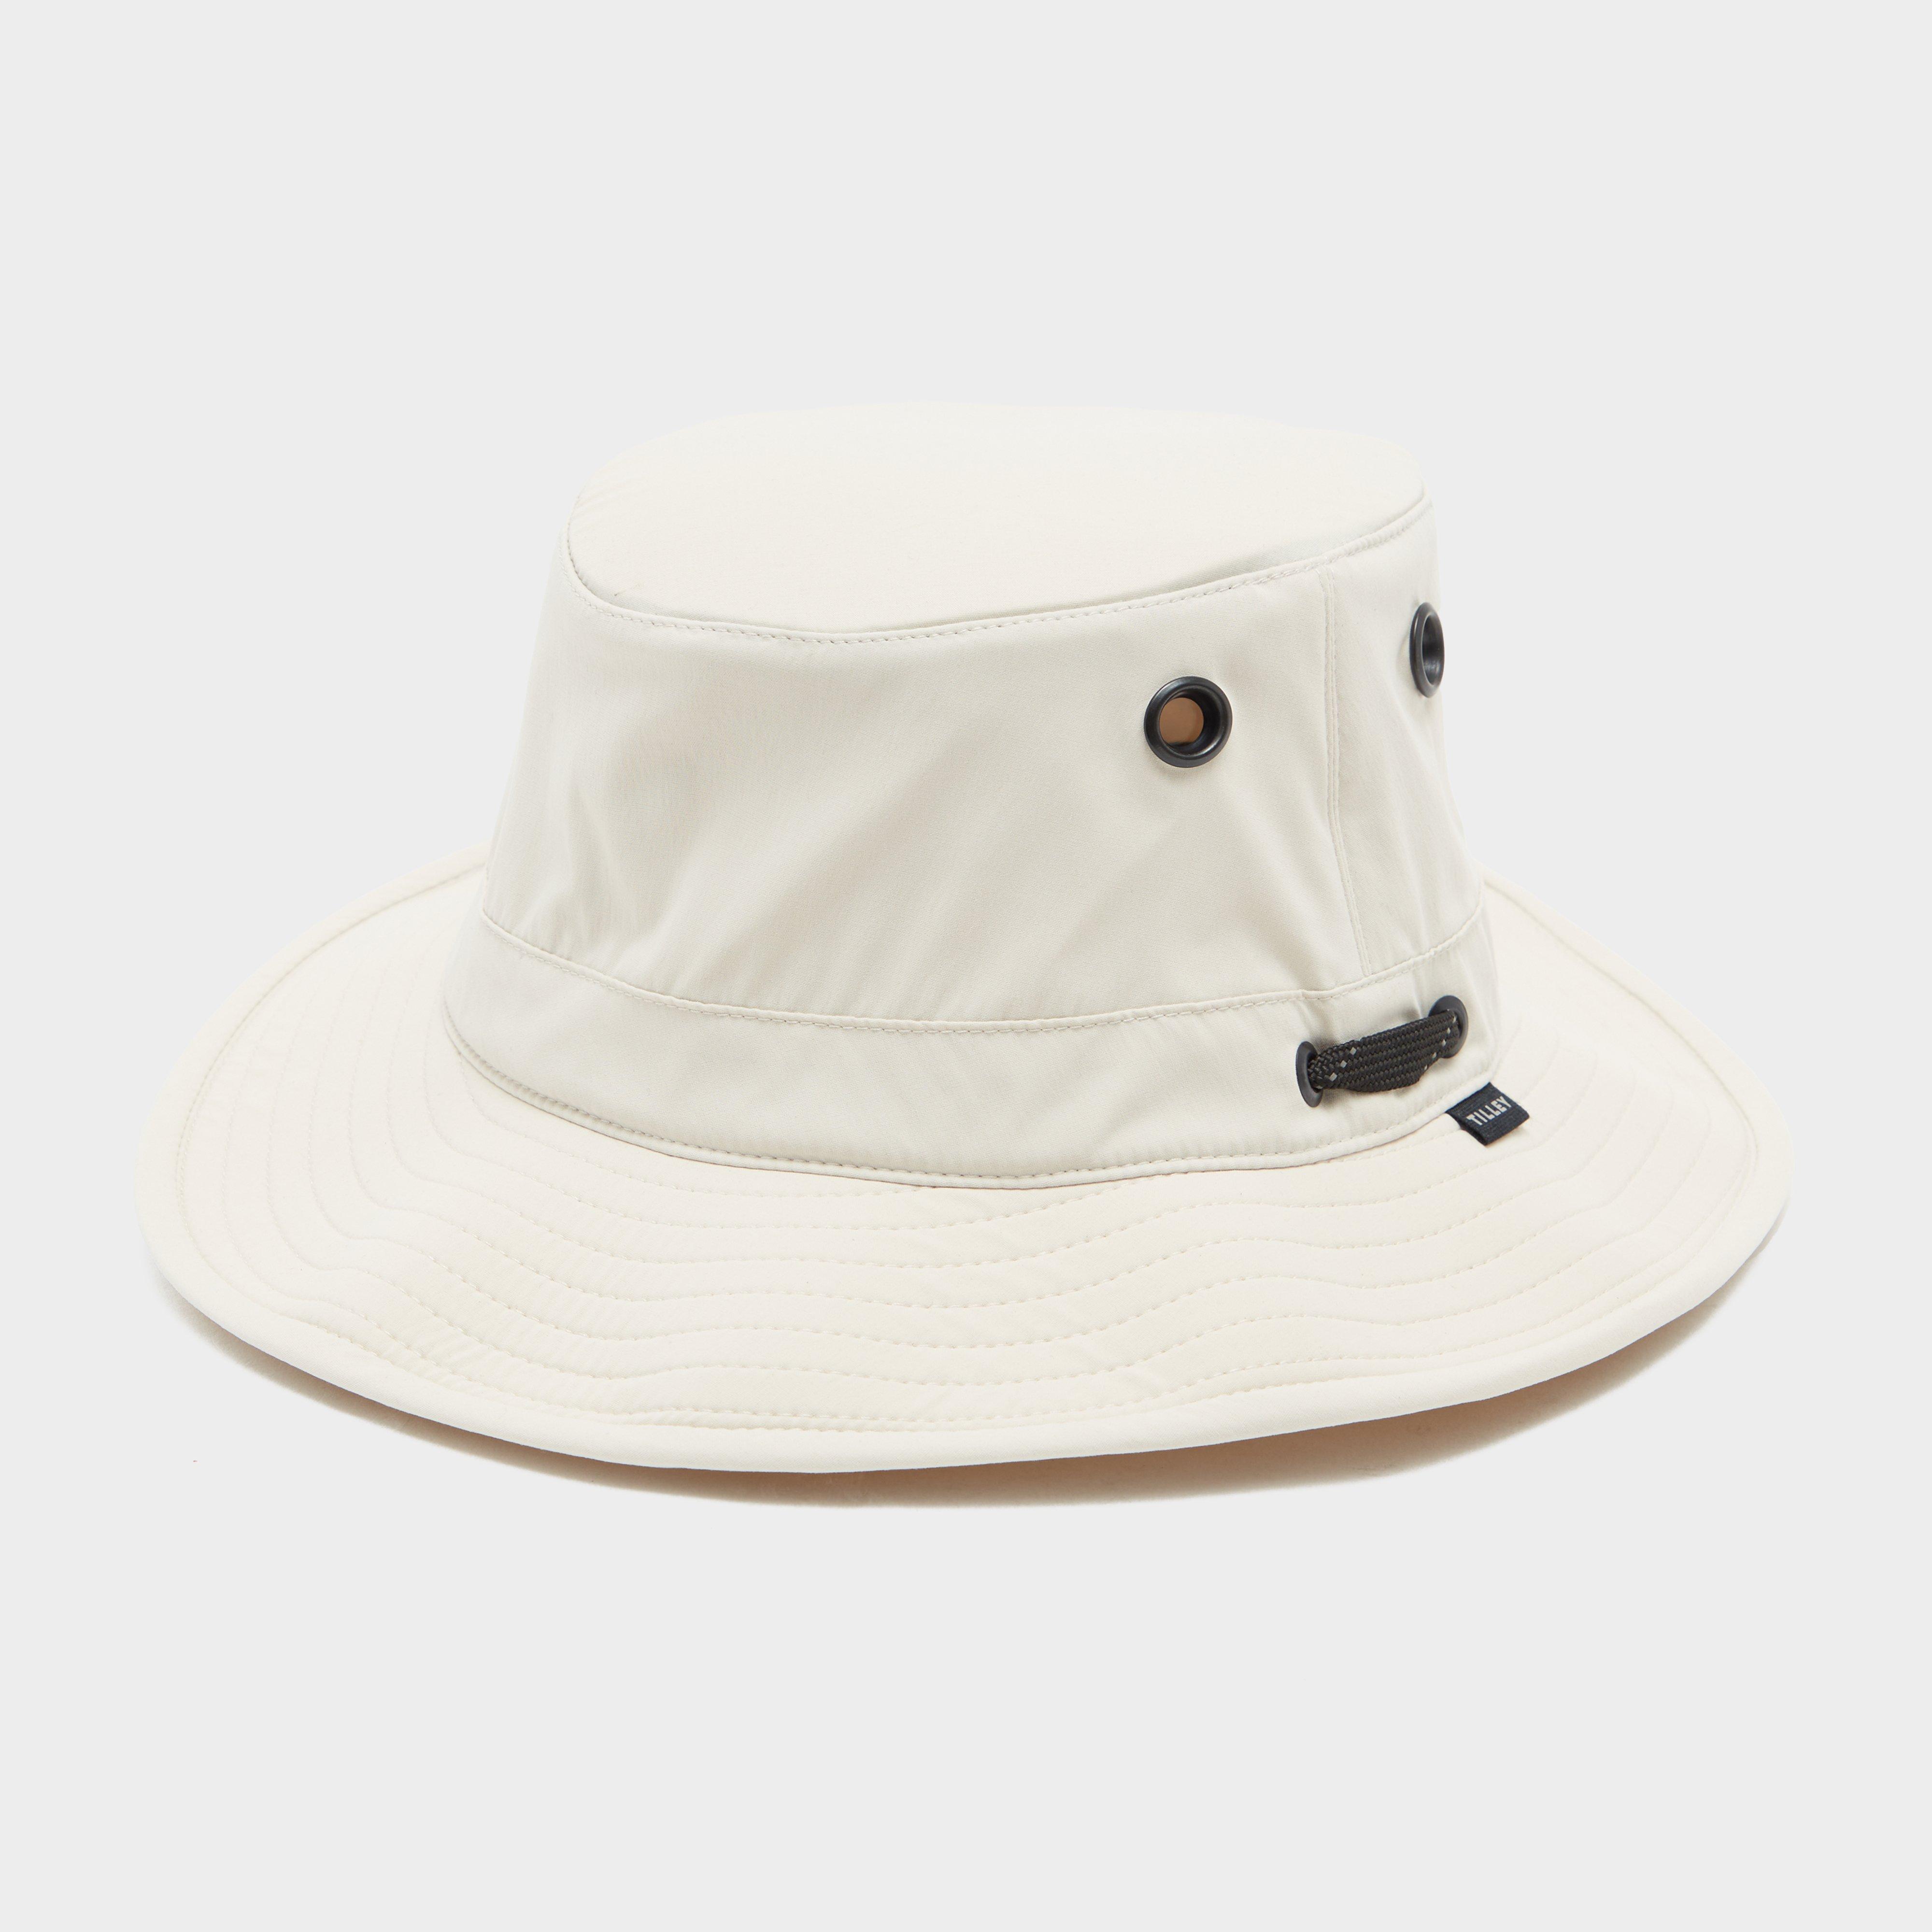  Tilley Ultralight T5 Classic Hat, Cream